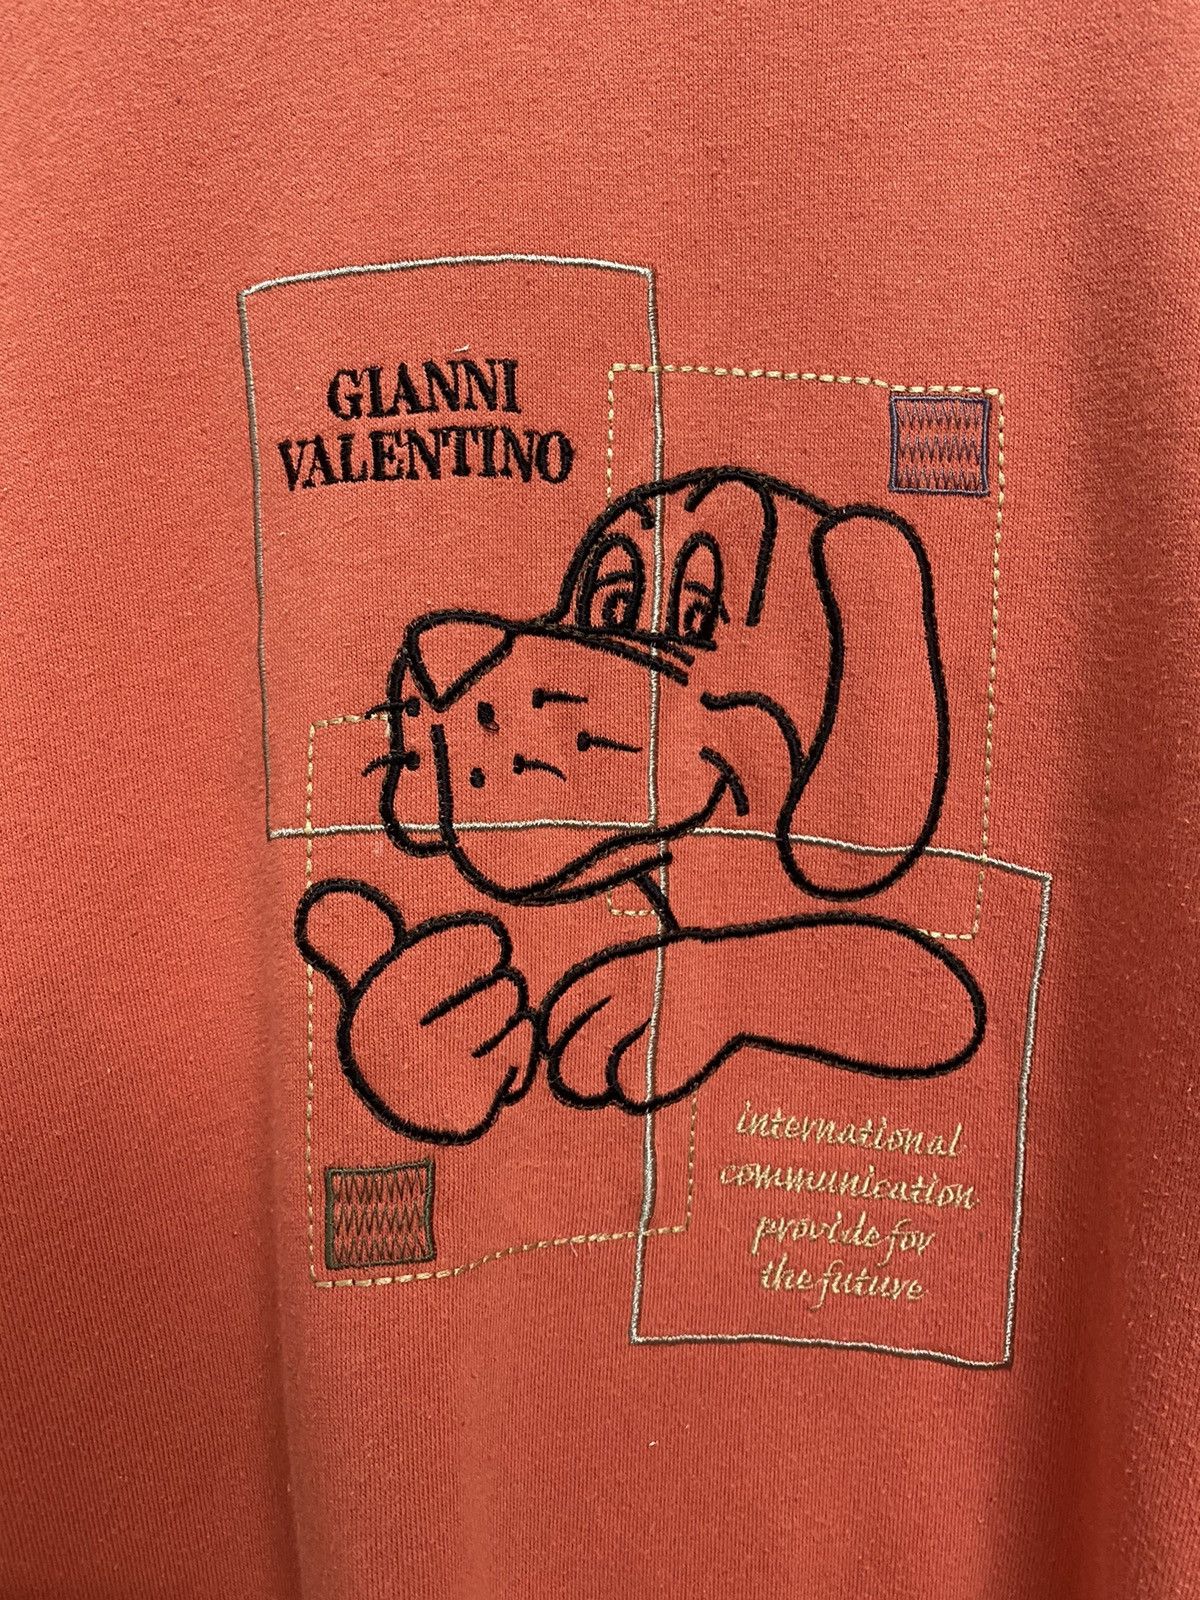 Vintage Gianni Valentino Sweatshirt - 3